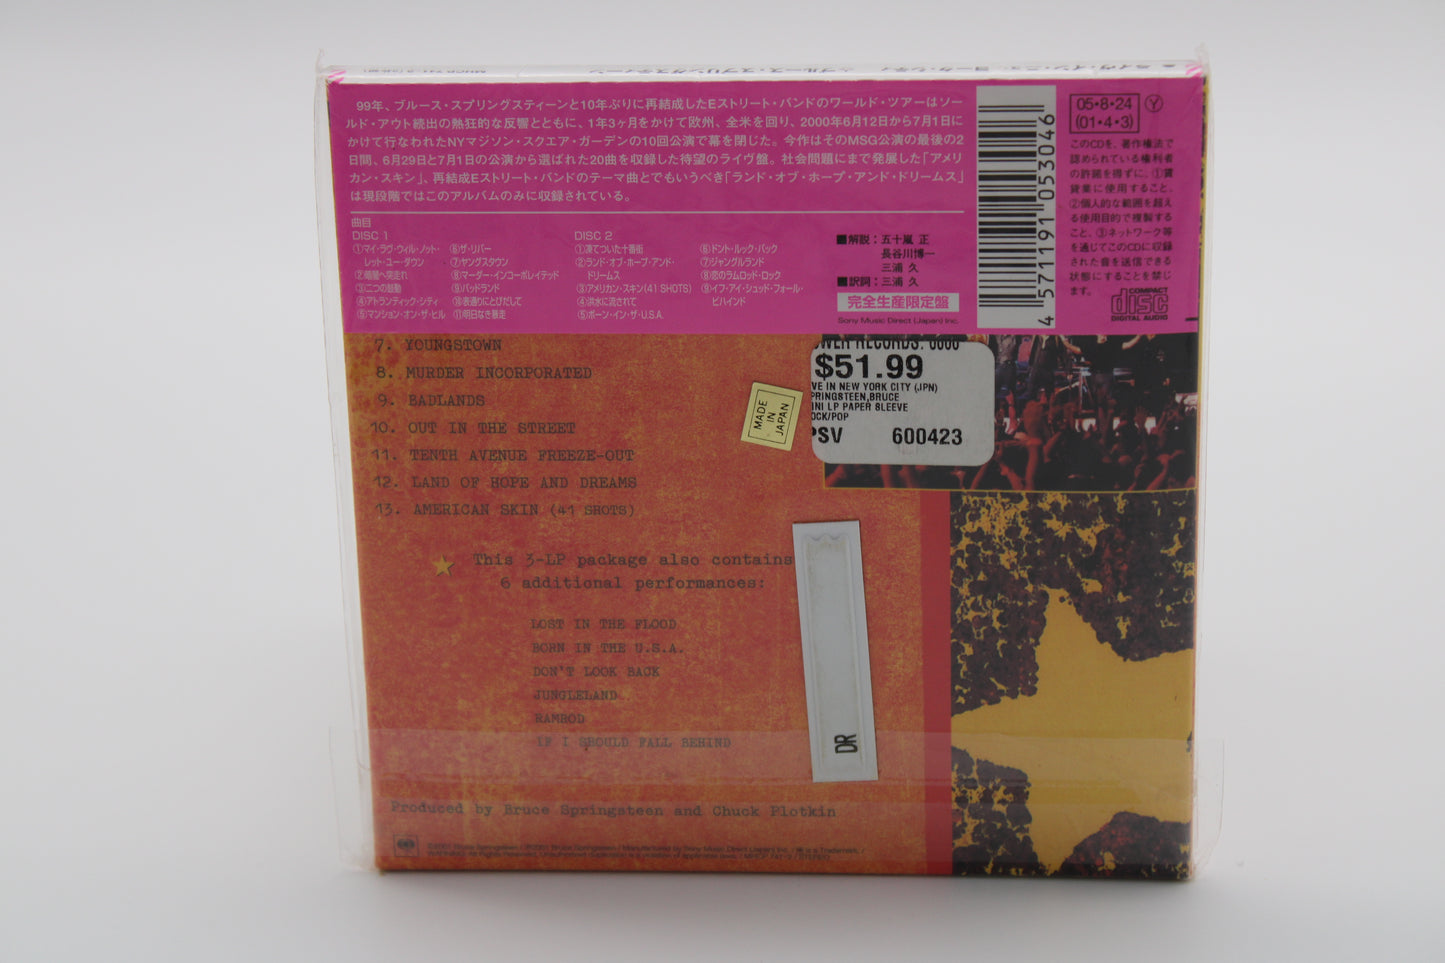 Bruce Springsteen SEALED - CD/Japan "Live in New York City" Import